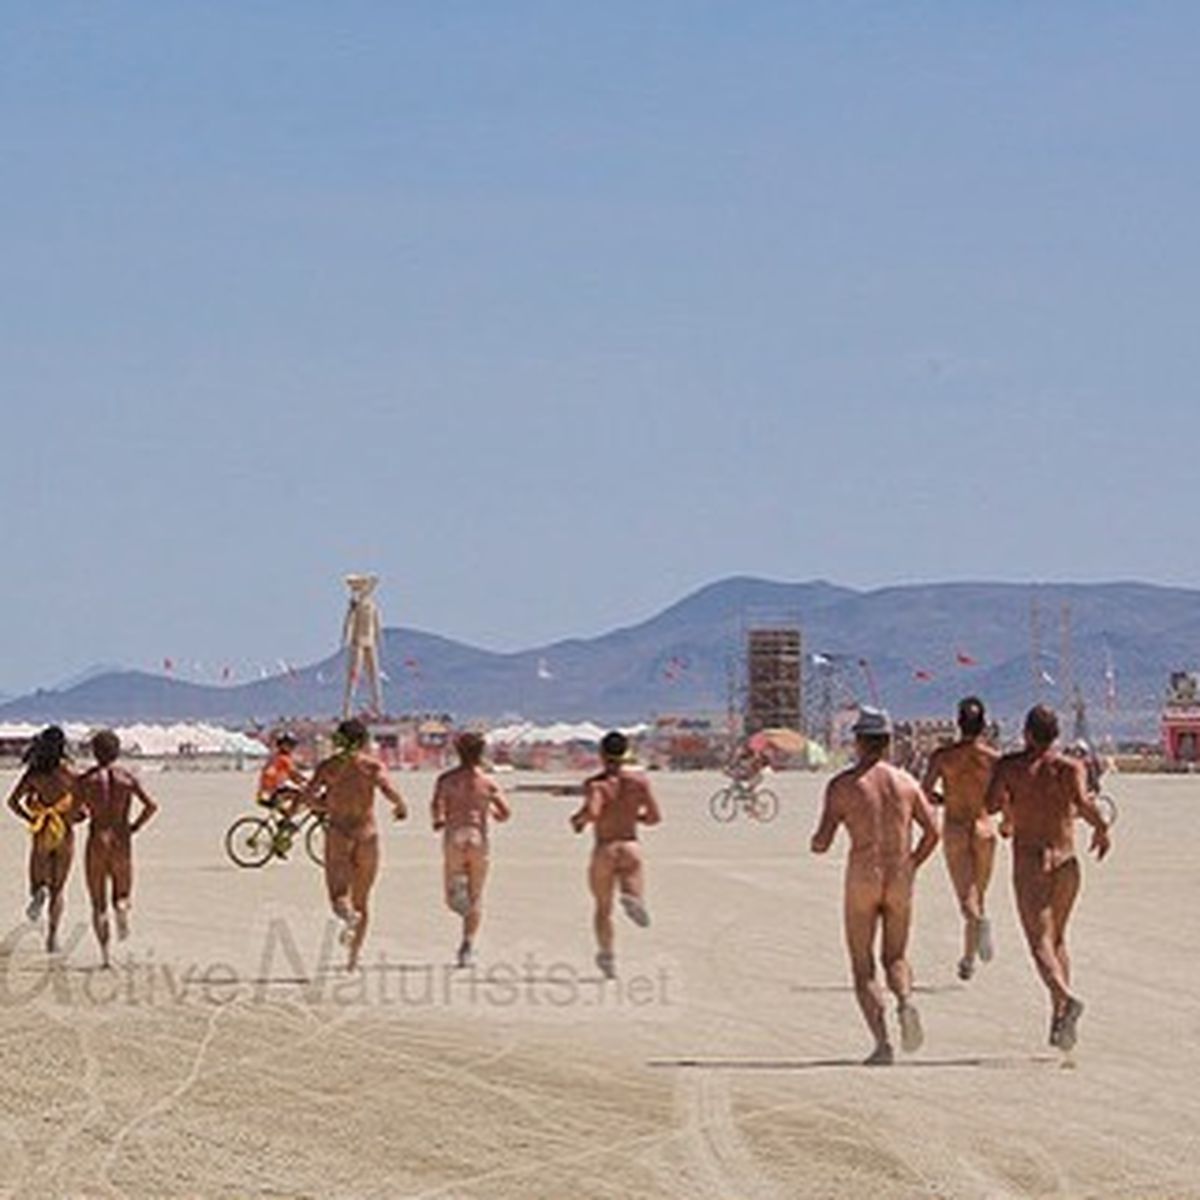 https://www.nudismlife.com/galleries/public_nudity/burning_man/active_naturists/active_naturists_012.jpg